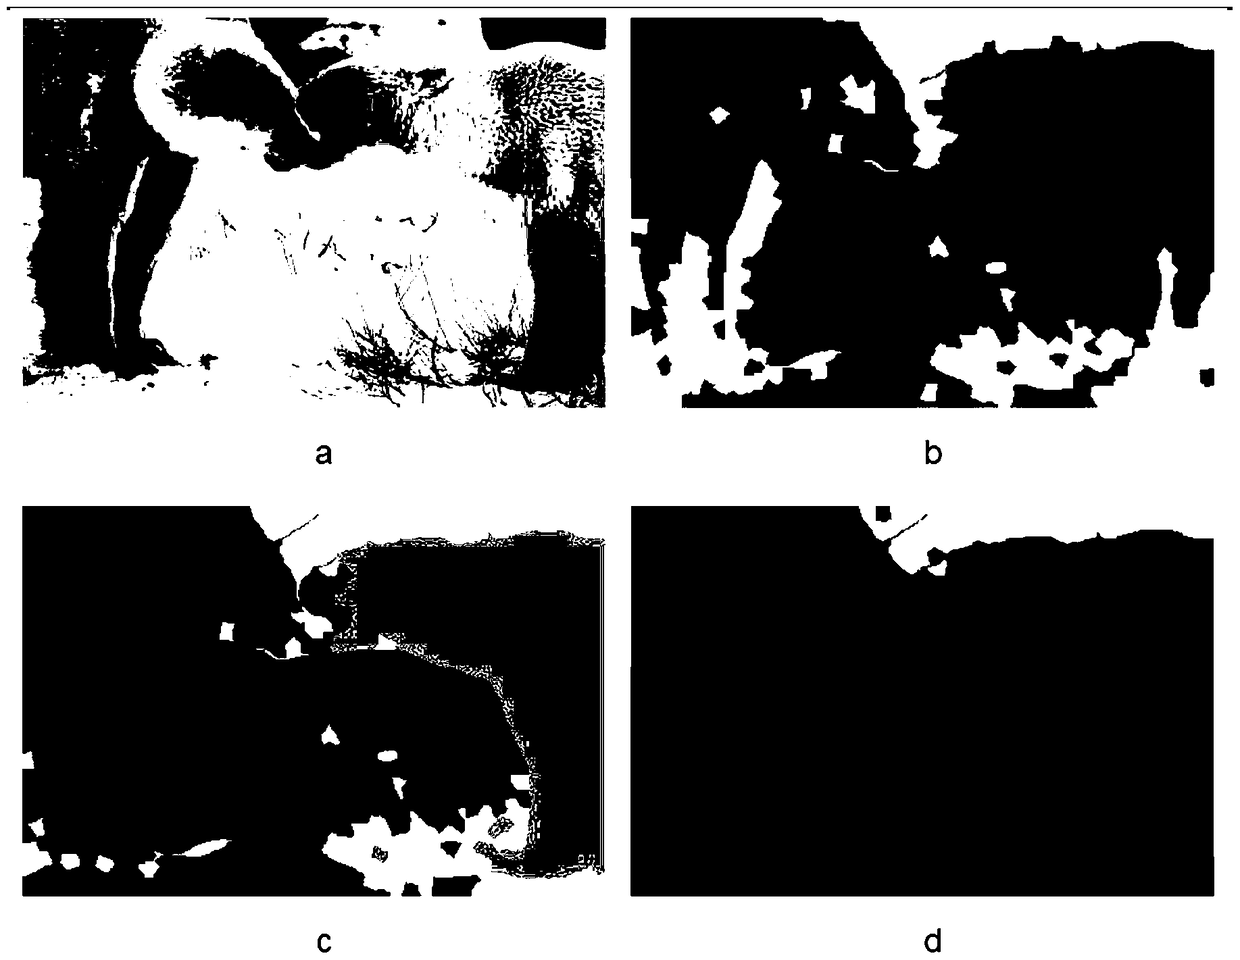 Neighbor Propagation Clustering Image Segmentation Method Based on Fuzzy Connectivity